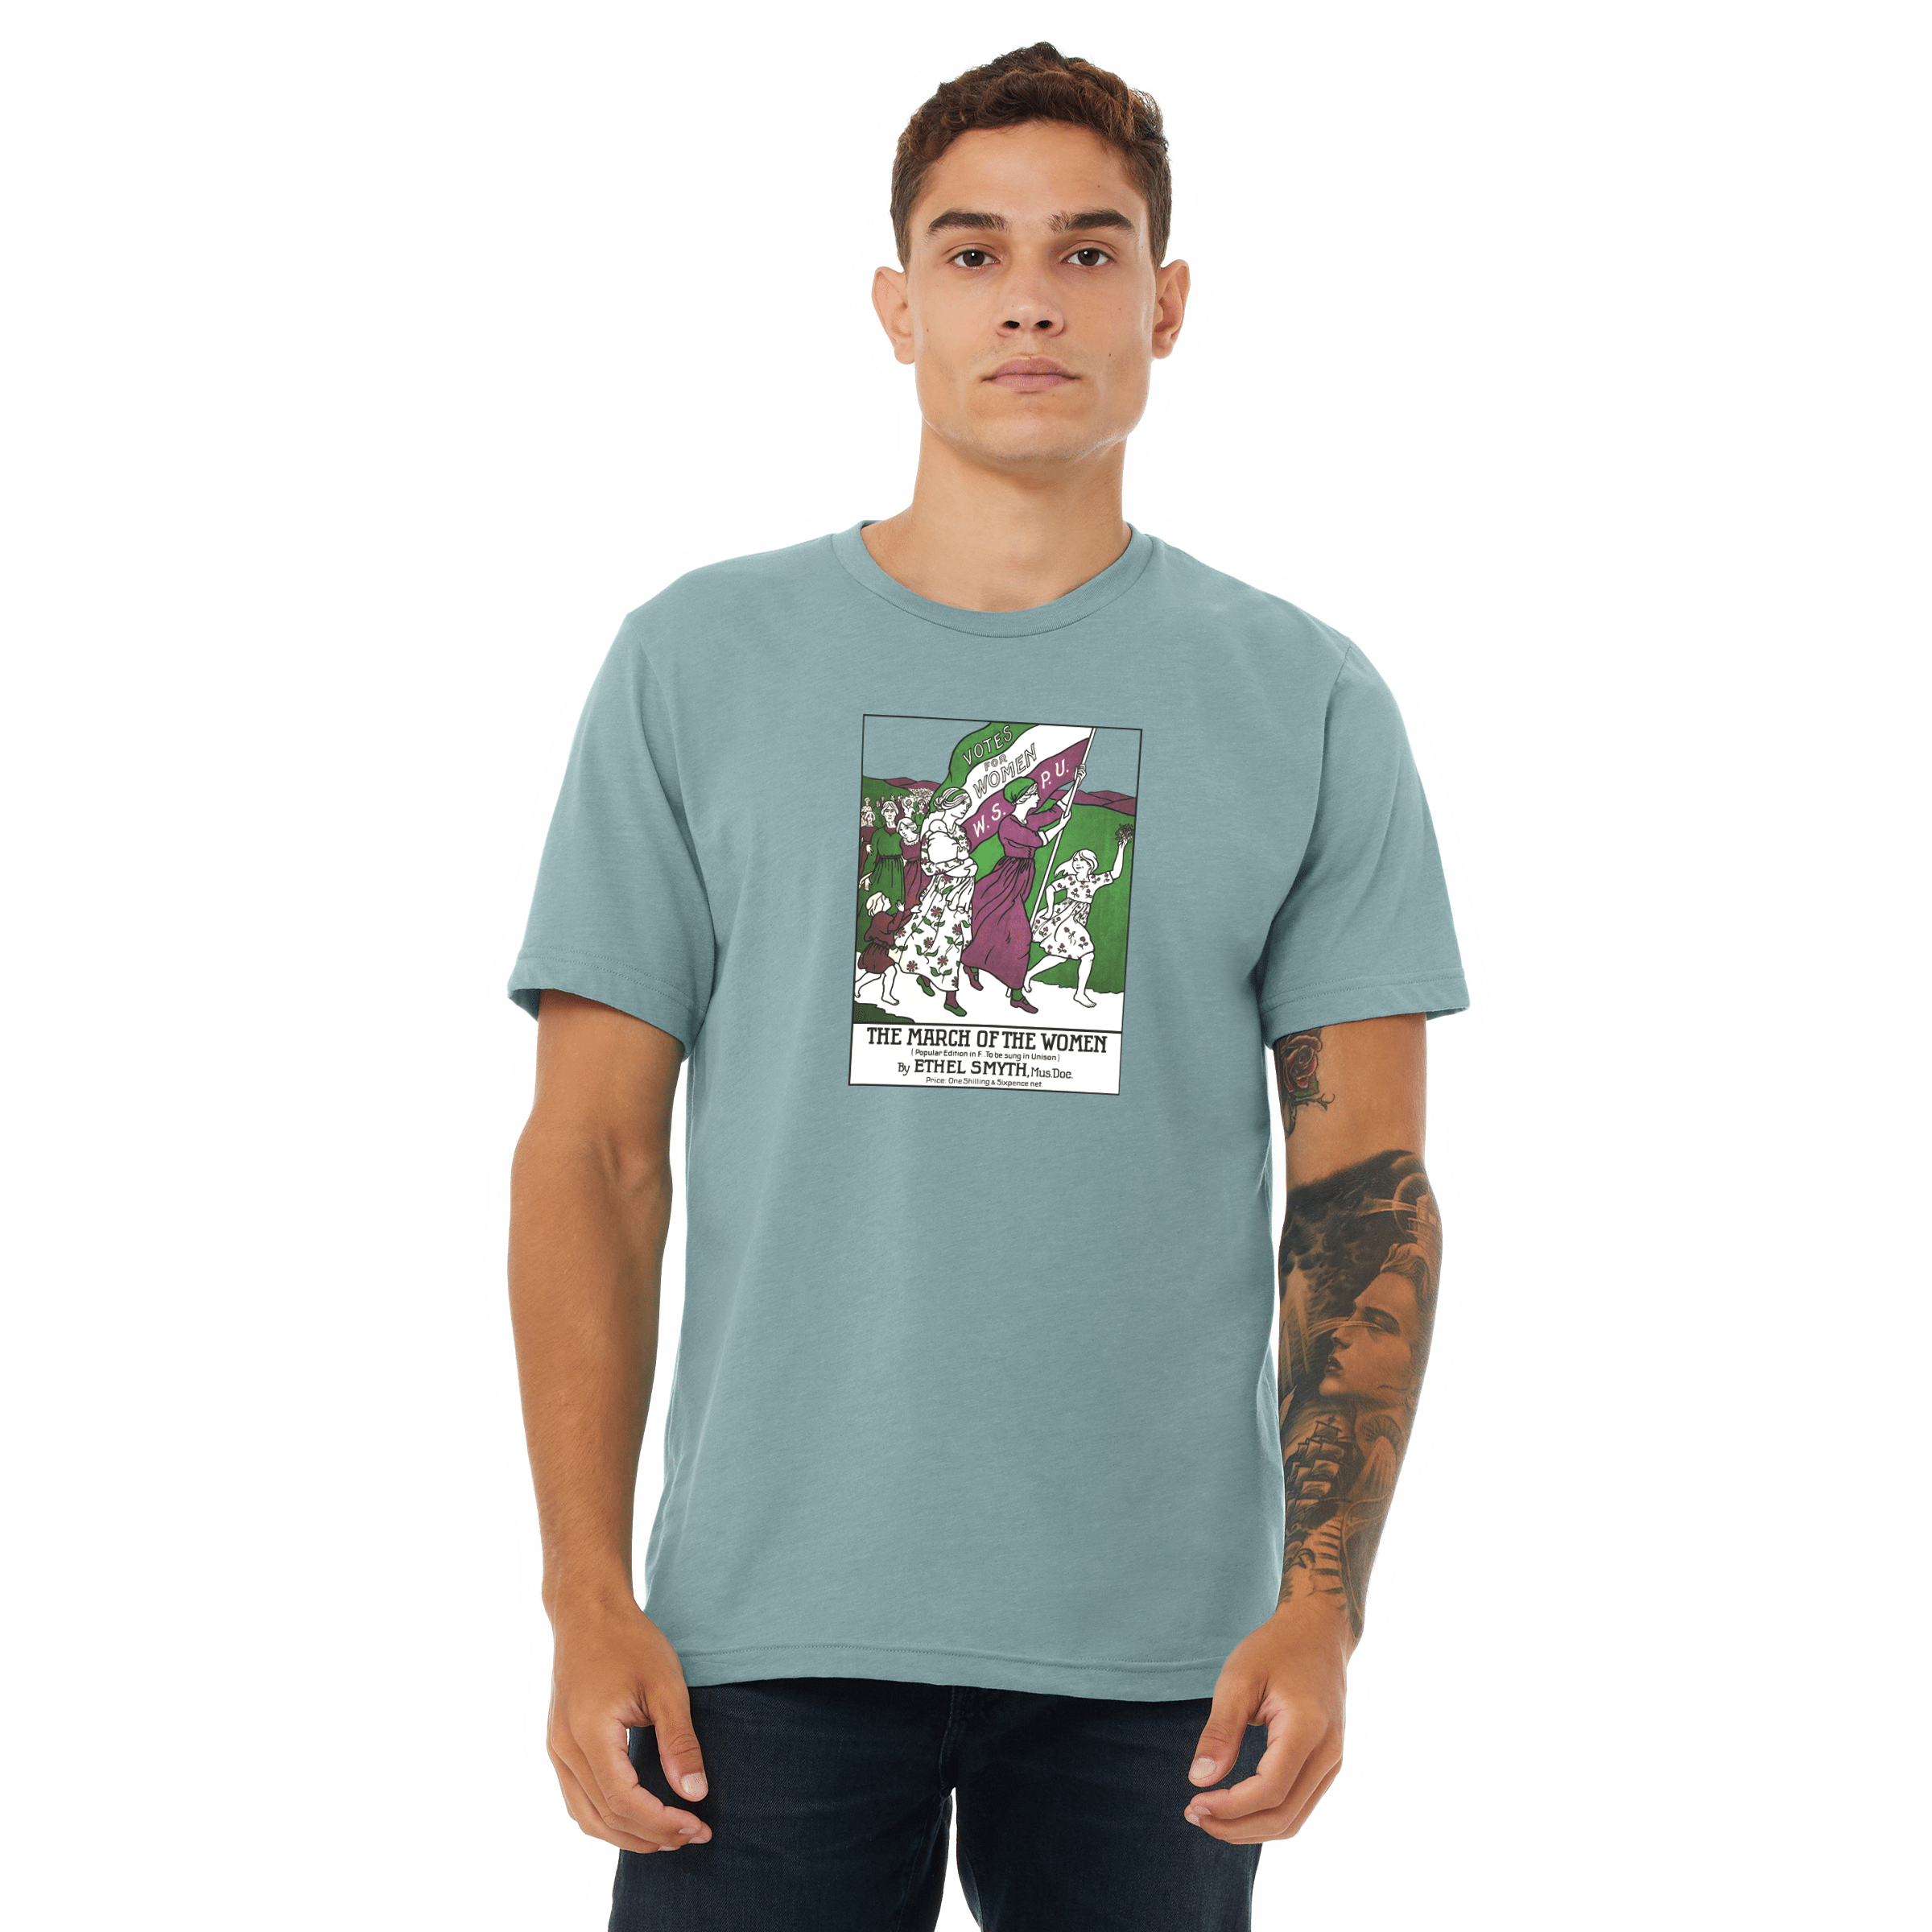 Ethel Smyth: March of the Women T-Shirt